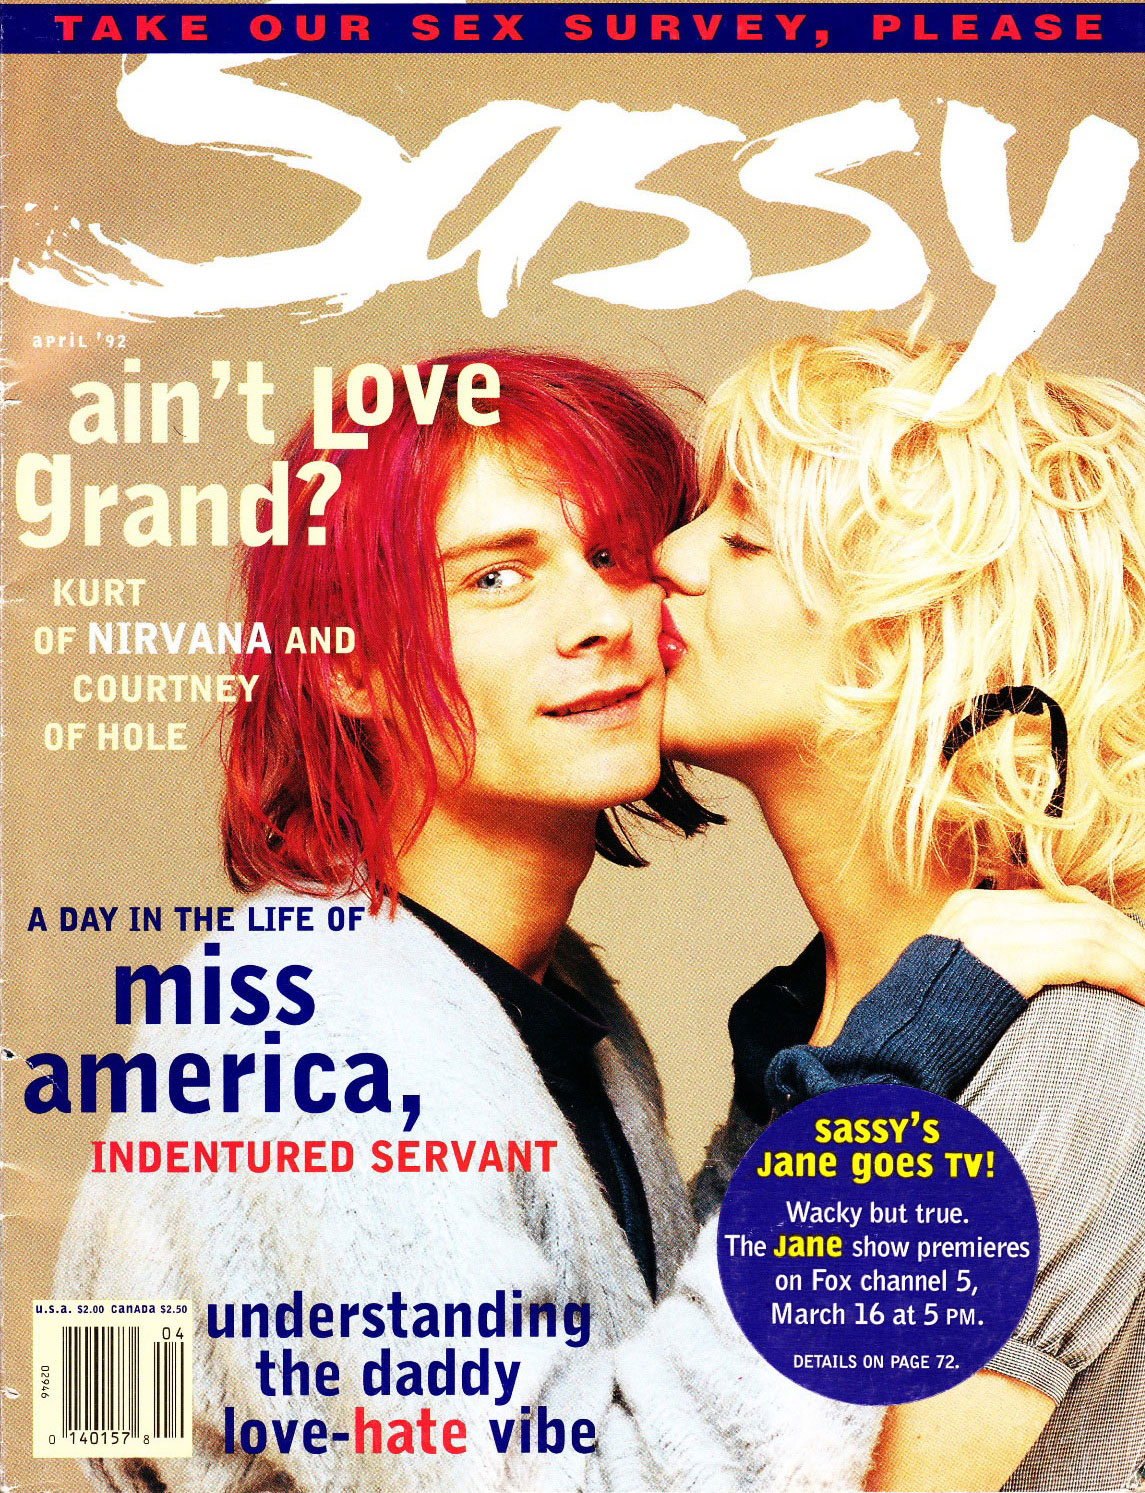 Sassy - MindVox (Kurt Cobain and Courtney Love Cover)